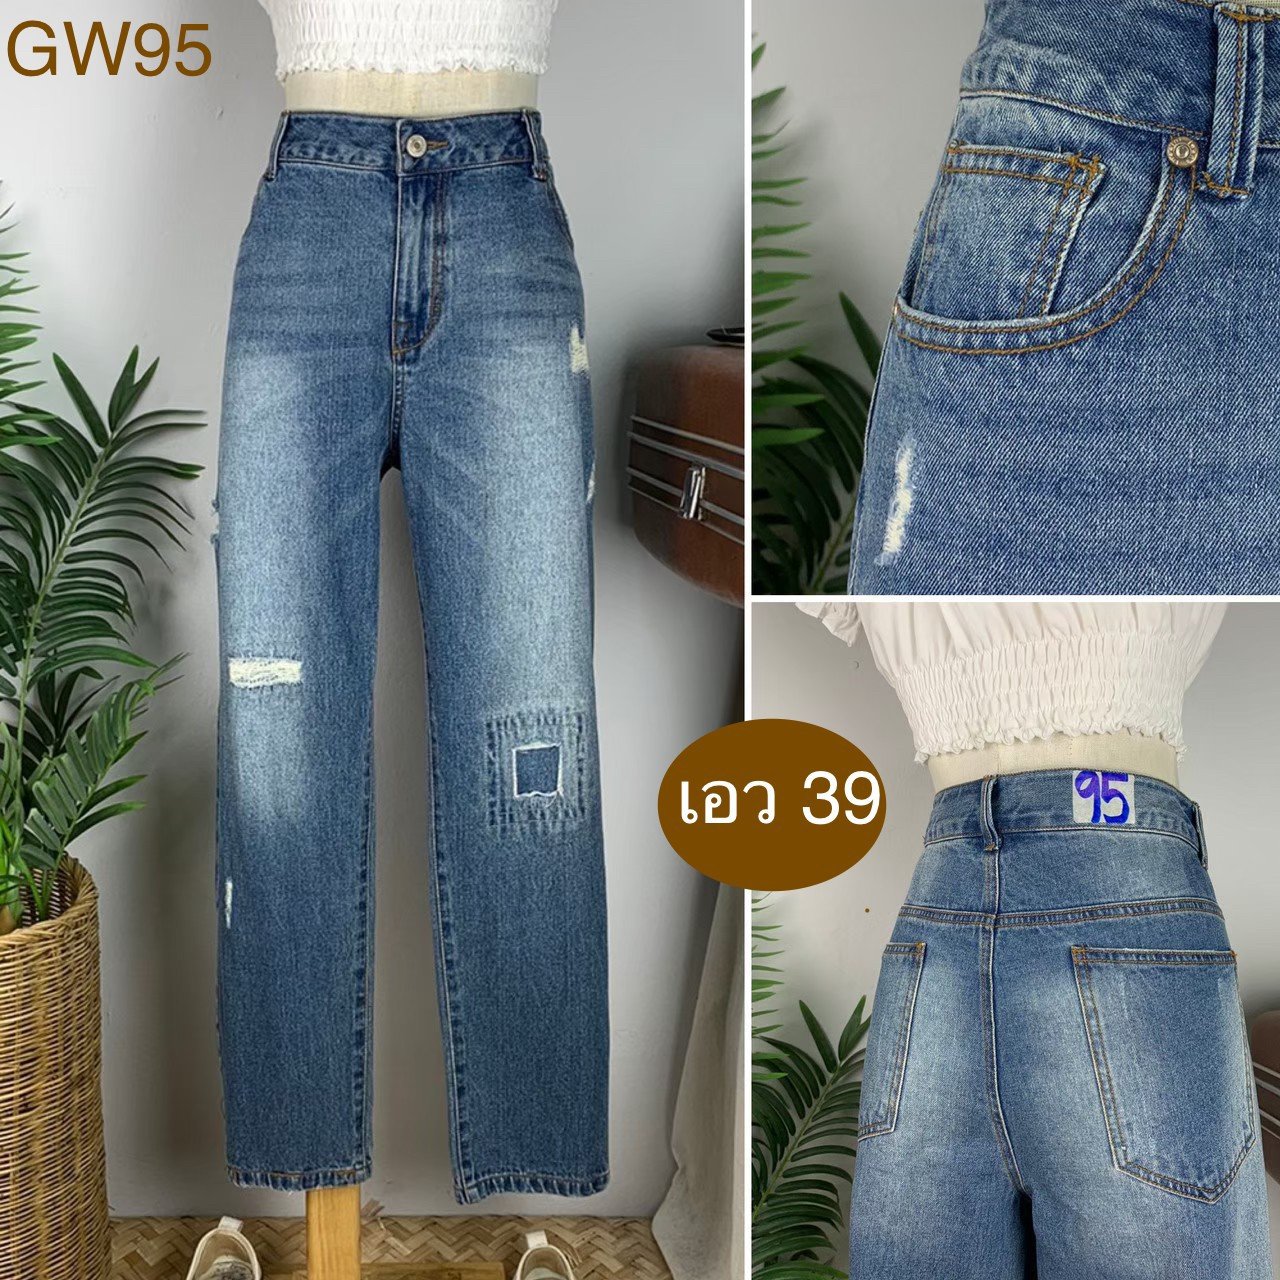 ♥️ รหัสGW95 ▪️ป้าย Theaini Jeans  ▪️ เอว 39" สะโพก 44" ต้นขา 26" ▪️เป้า 11" ยาว 37" (นิ้ว)